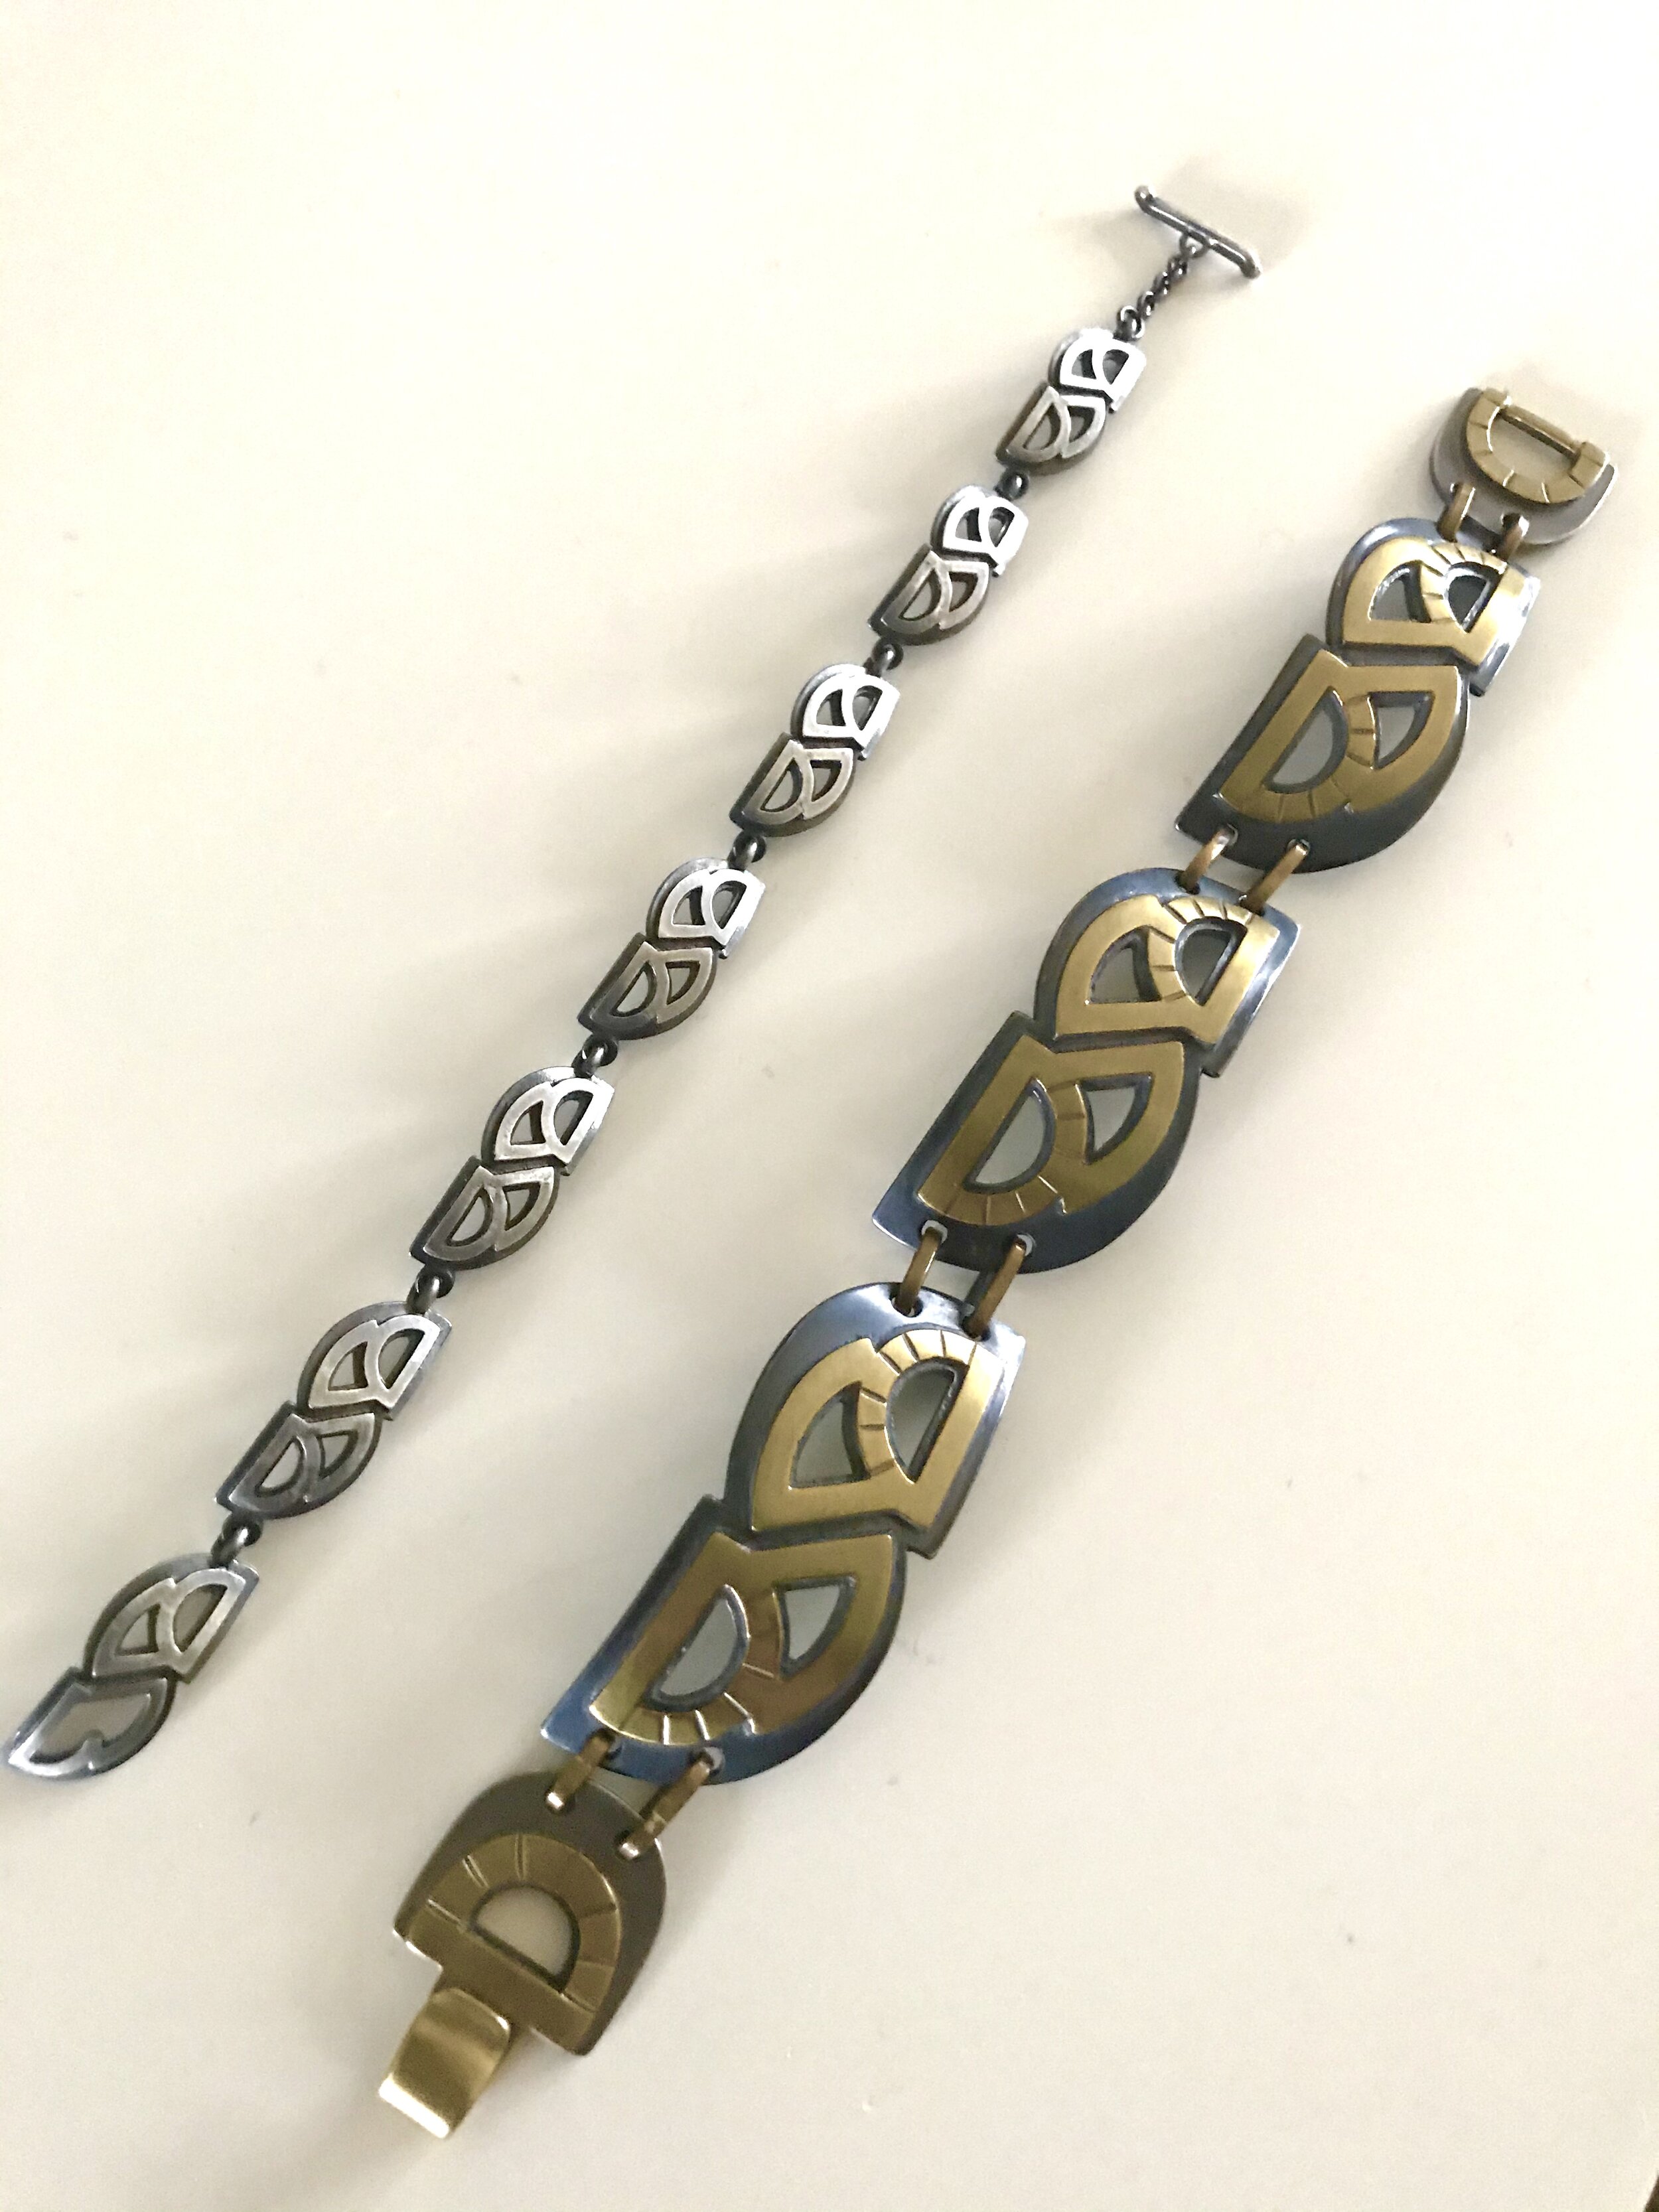 Protractor Series Link Bracelets $800-$975